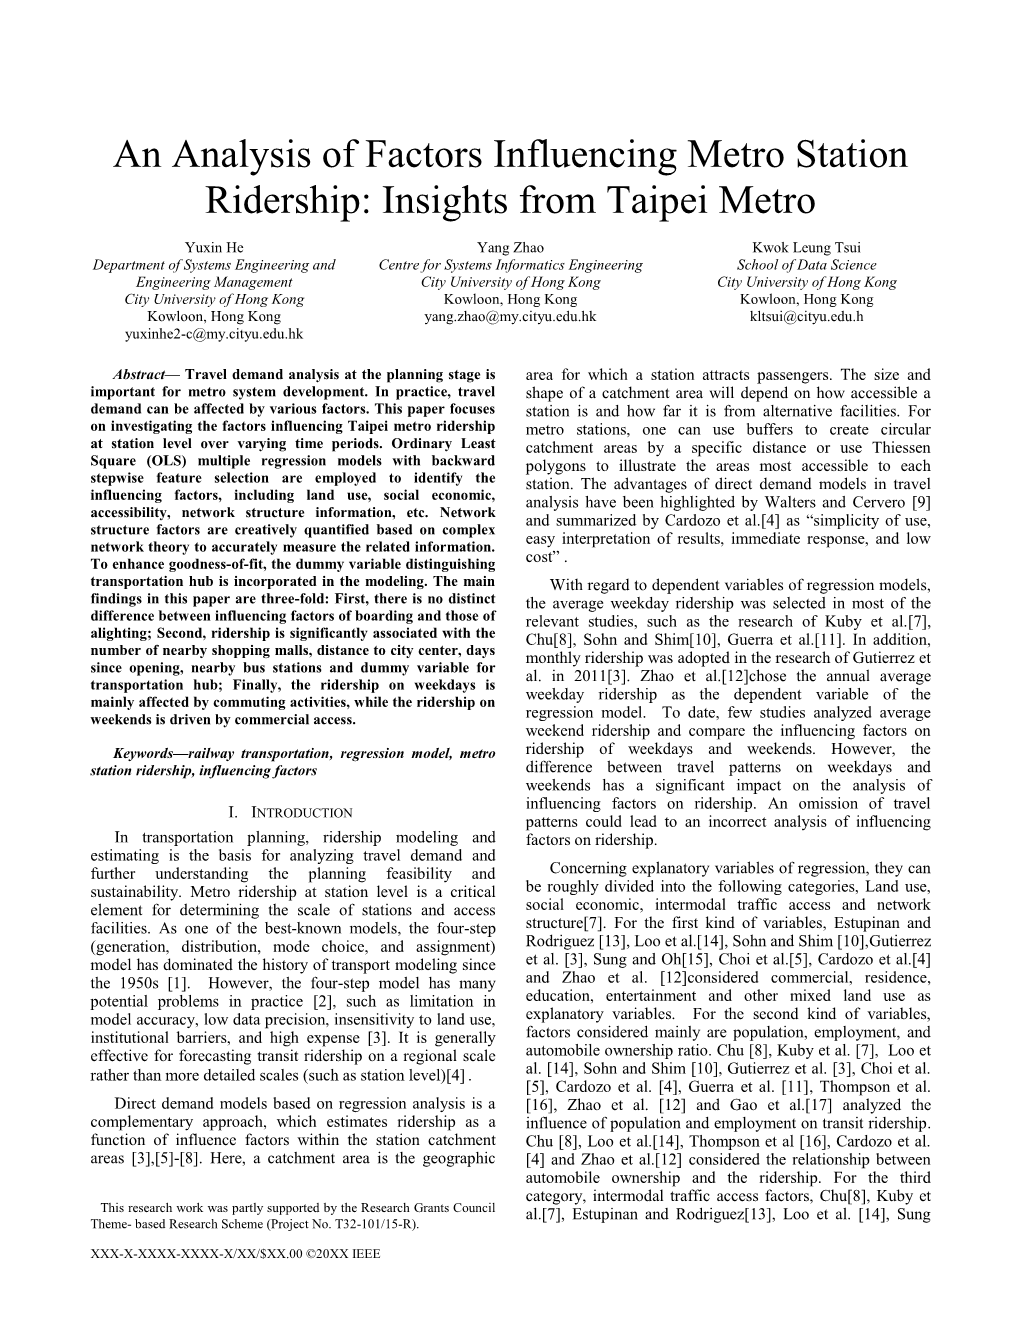 An Analysis of Factors Influencing Metro Station Ridership: Insights from Taipei Metro